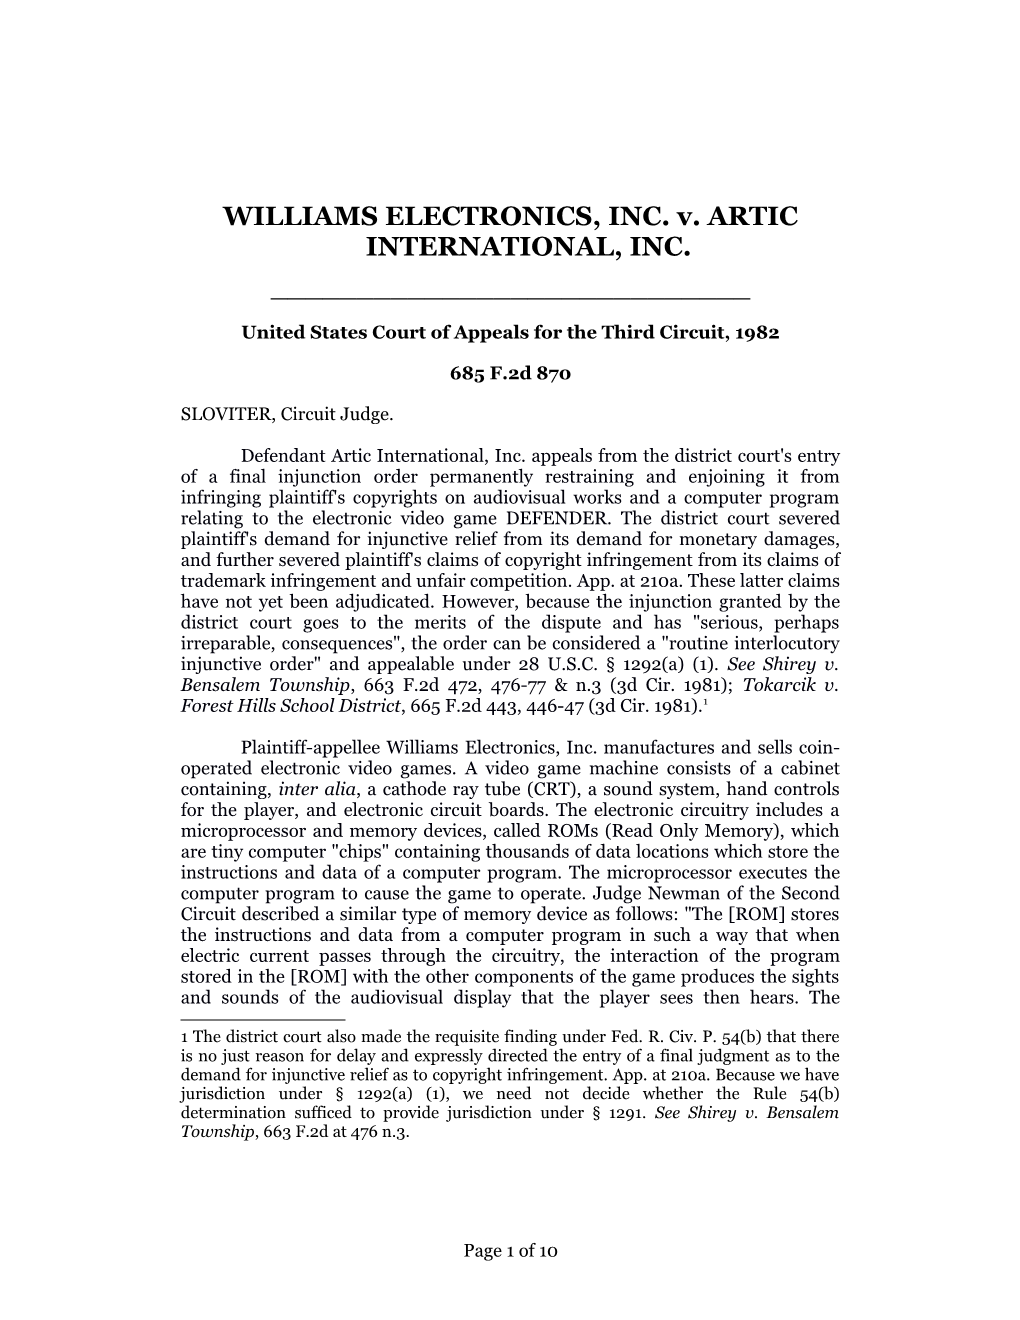 WILLIAMS ELECTRONICS, INC. V. ARTIC INTERNATIONAL, INC